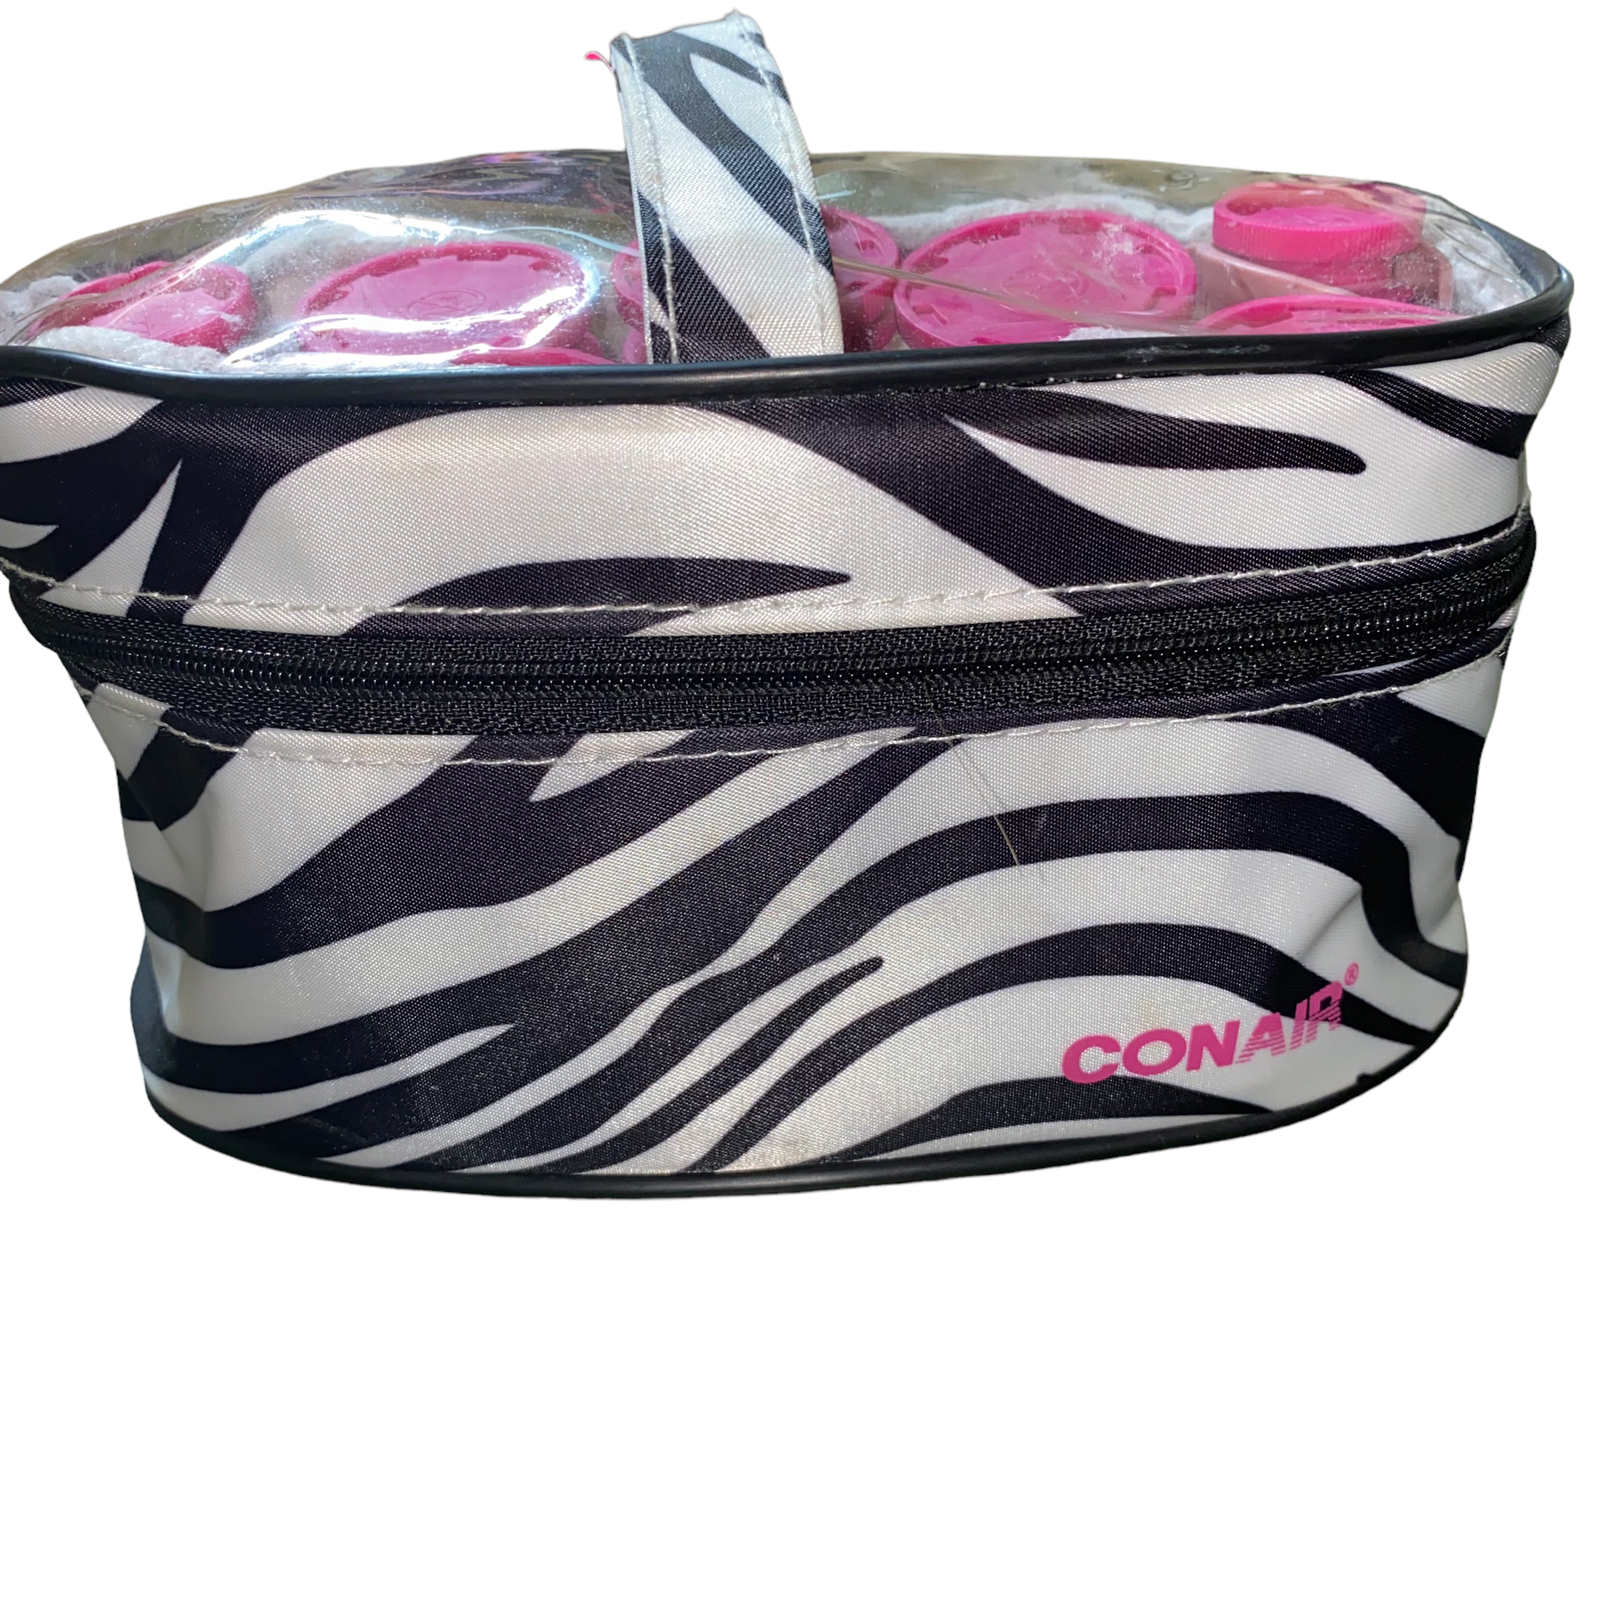 Conair Instant Heat Compact Pageant Pink Hot Roller Curler Set Zebra Print case - $23.03